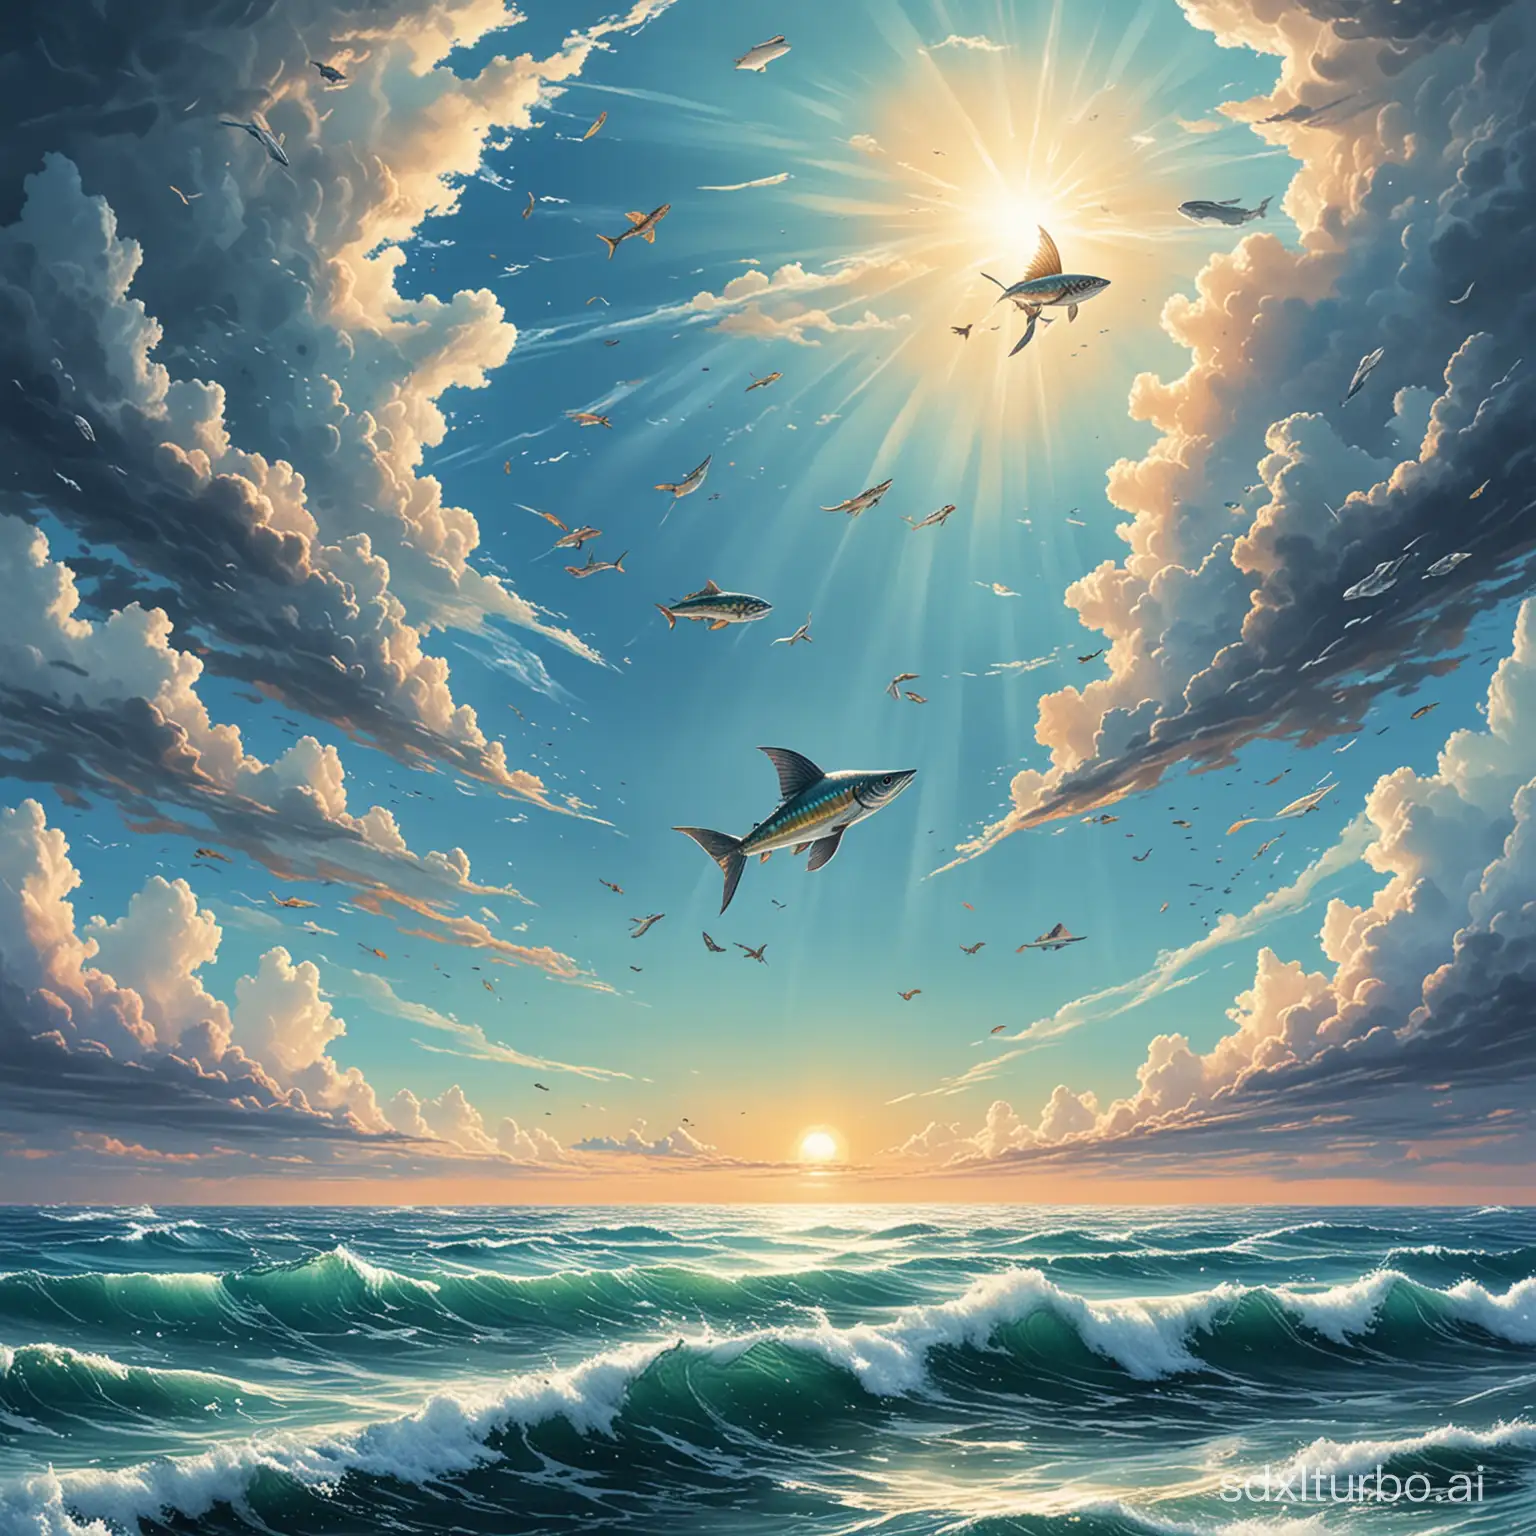 Fantasy-Scene-Skyborne-Ocean-with-Flying-Fish